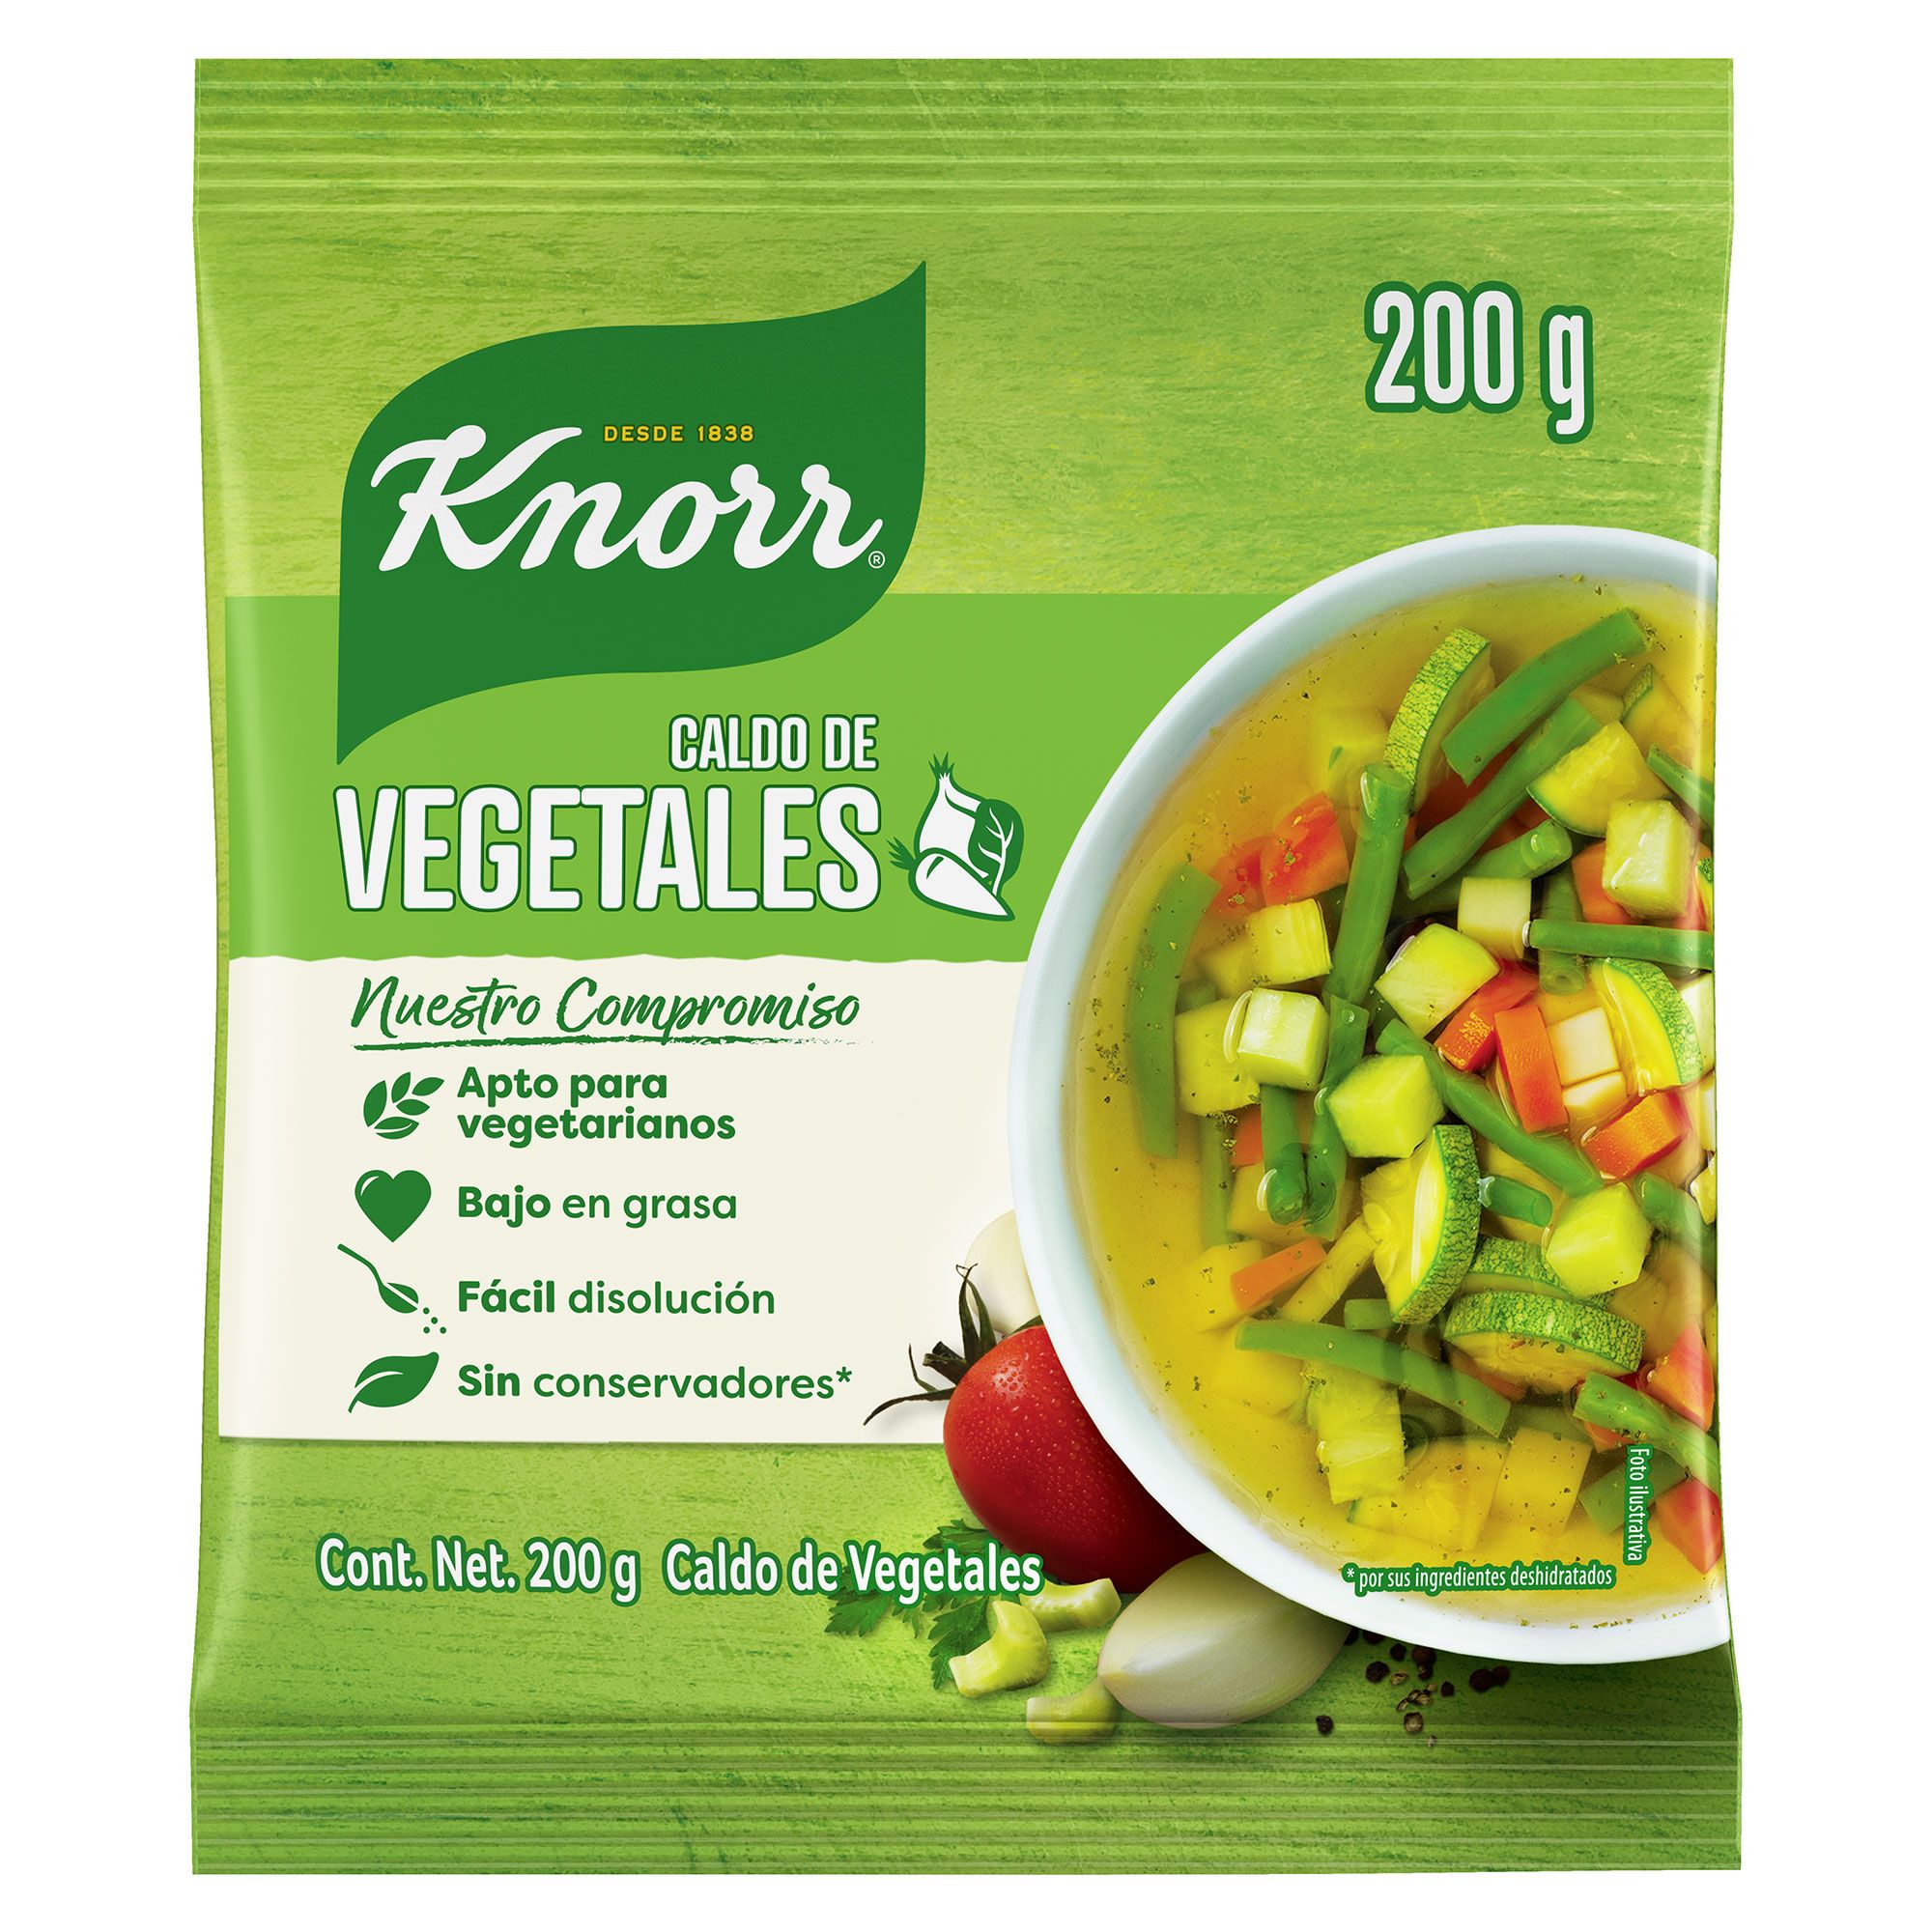 Caldo de Vegetales Knorr® 200 g